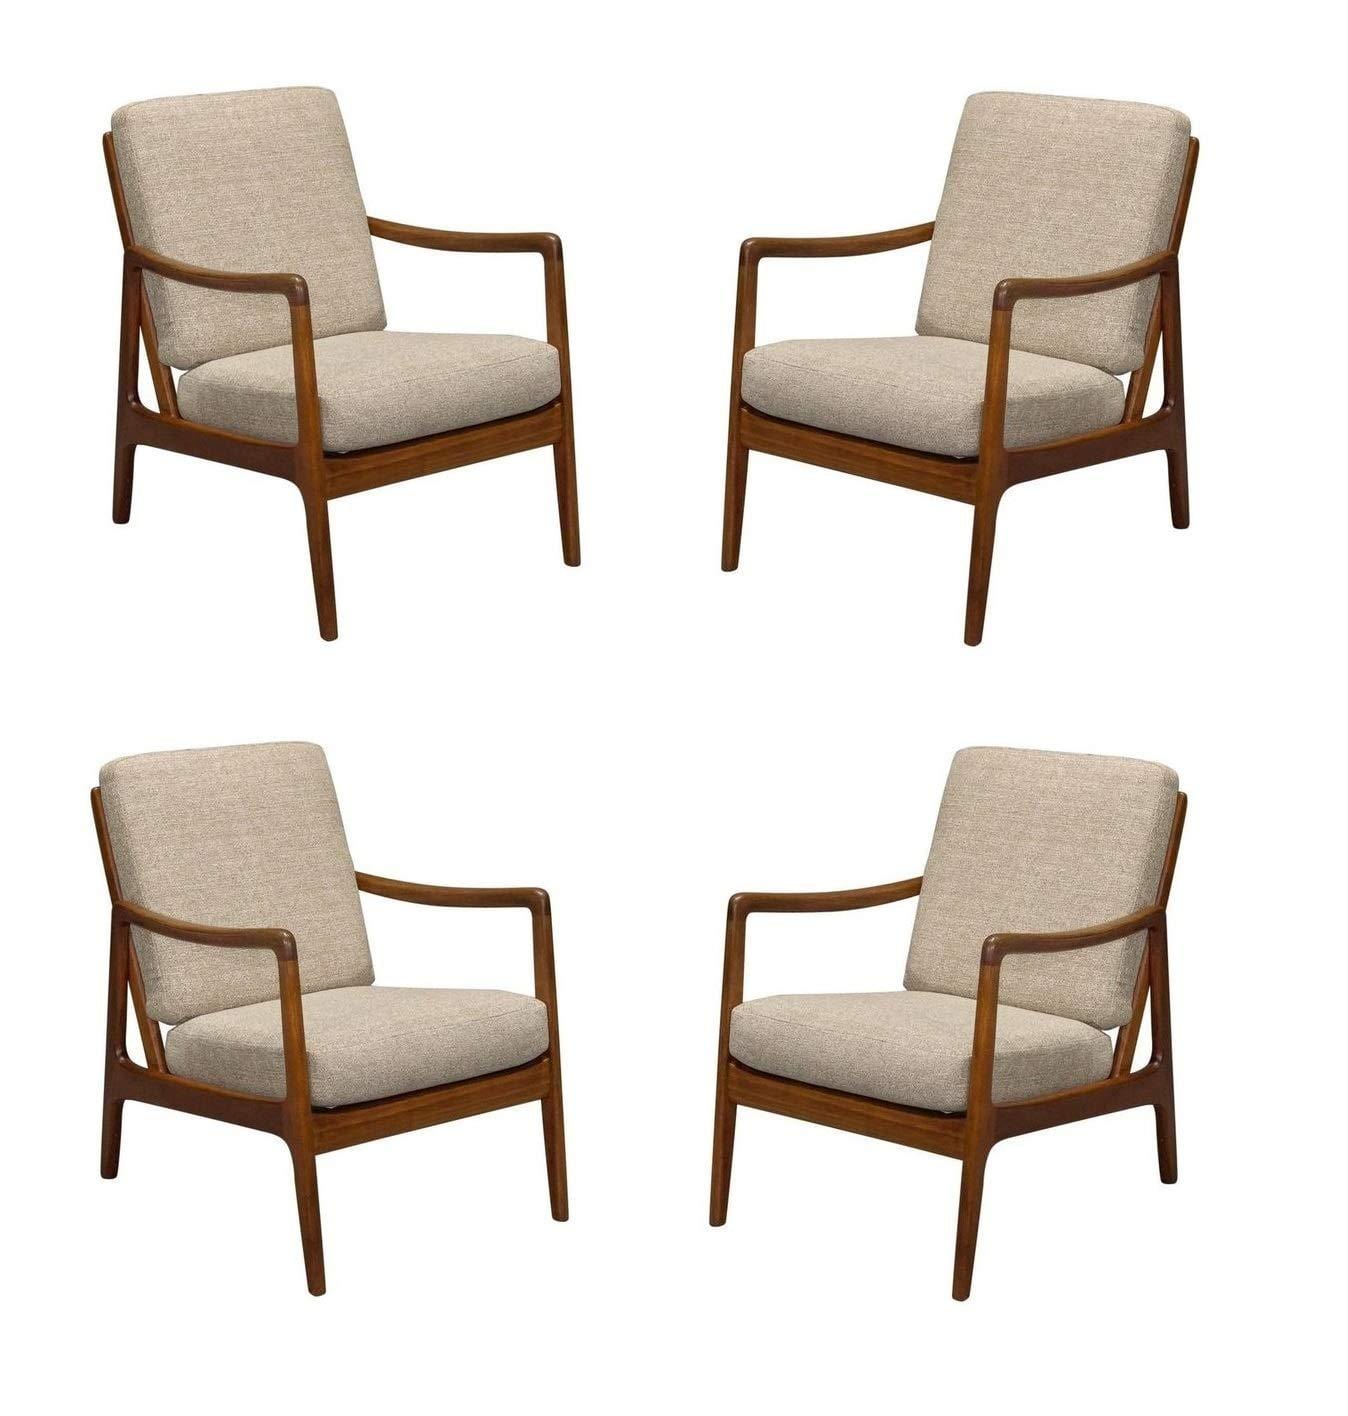 Handmade New Modern Design Decor Comfort Cushioned Chair Arm Seating Chair (4)